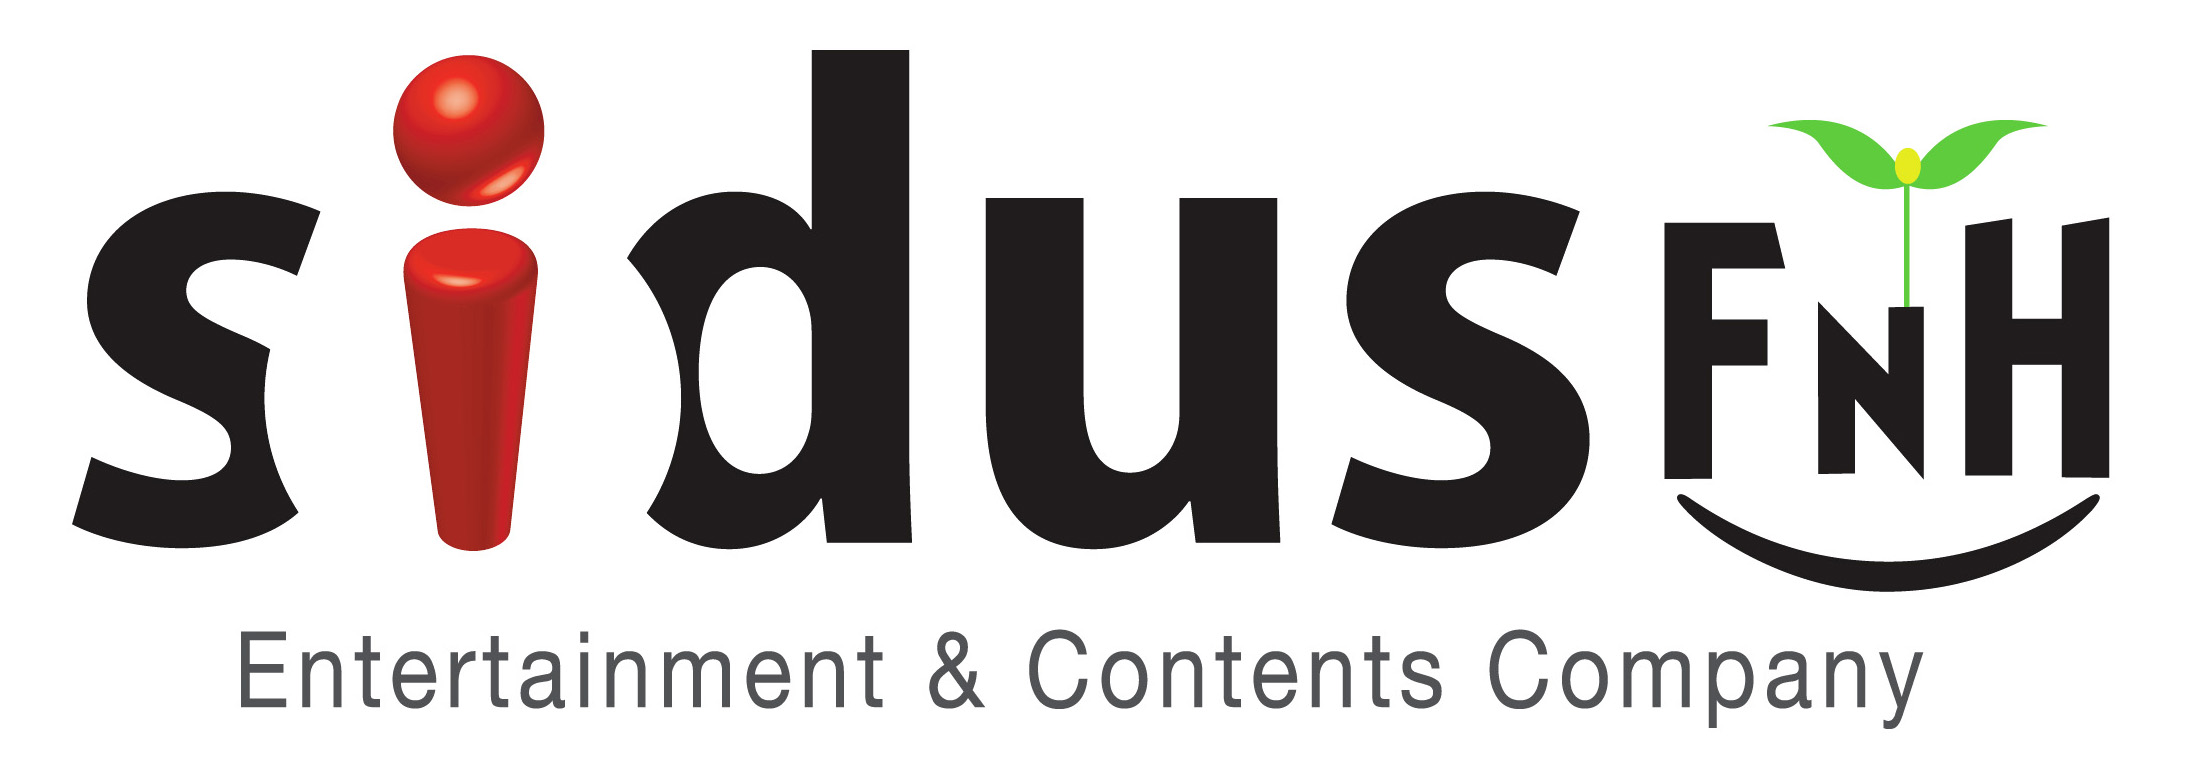 Sidusfnh_logo.jpg